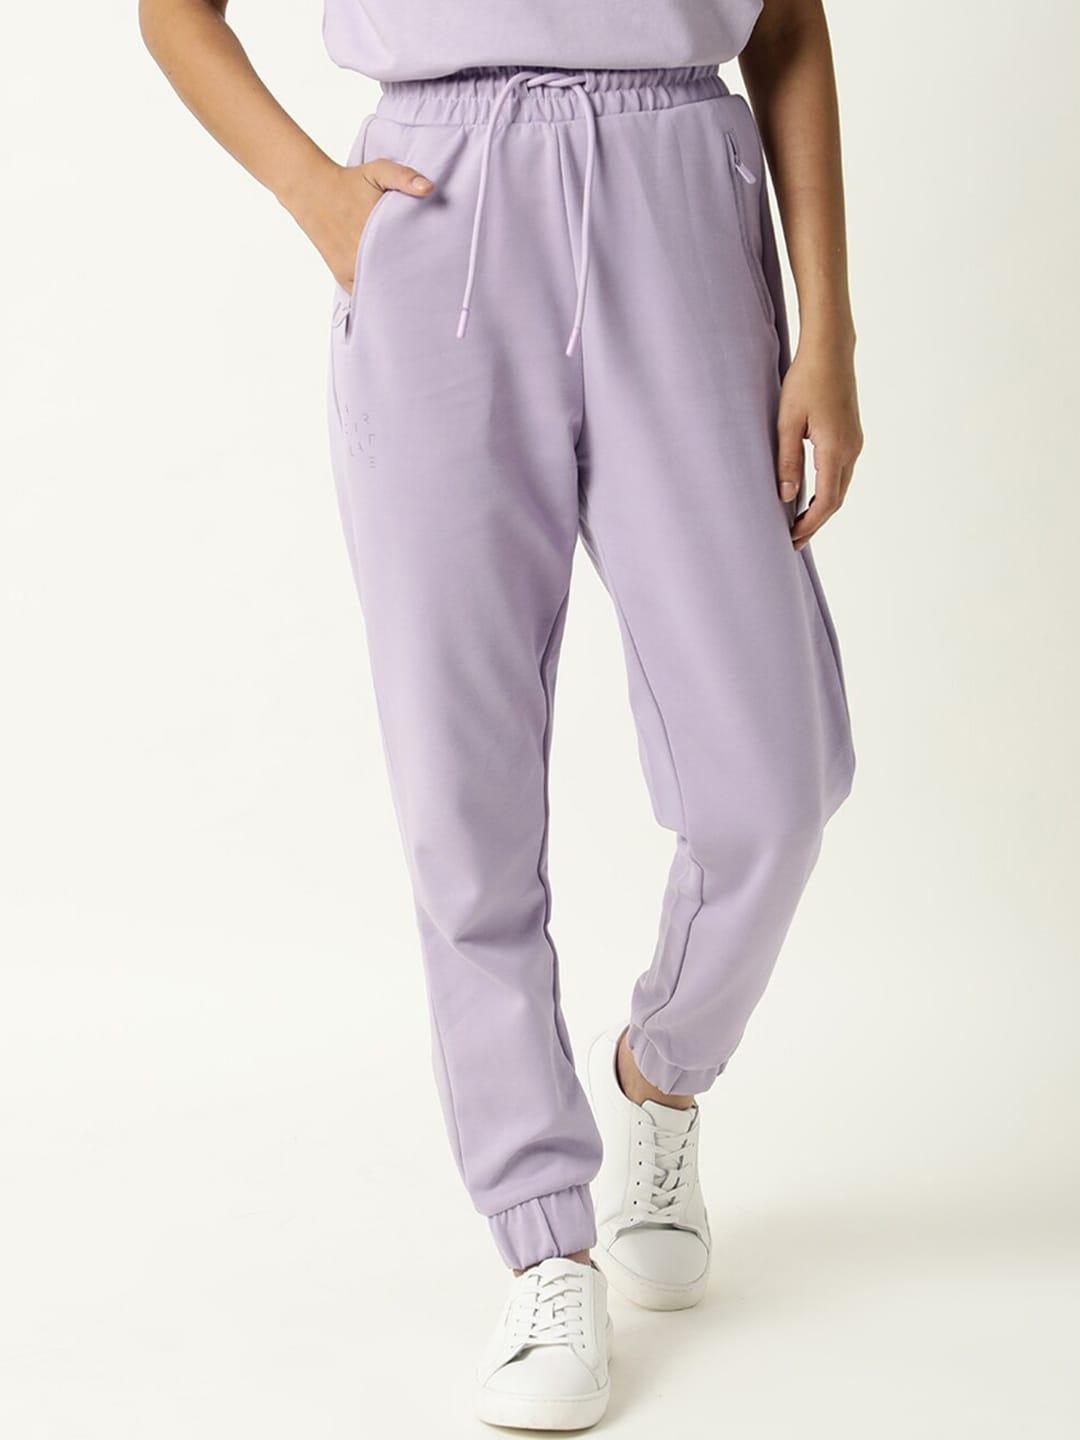 articale-women-purple-solid-track-pants